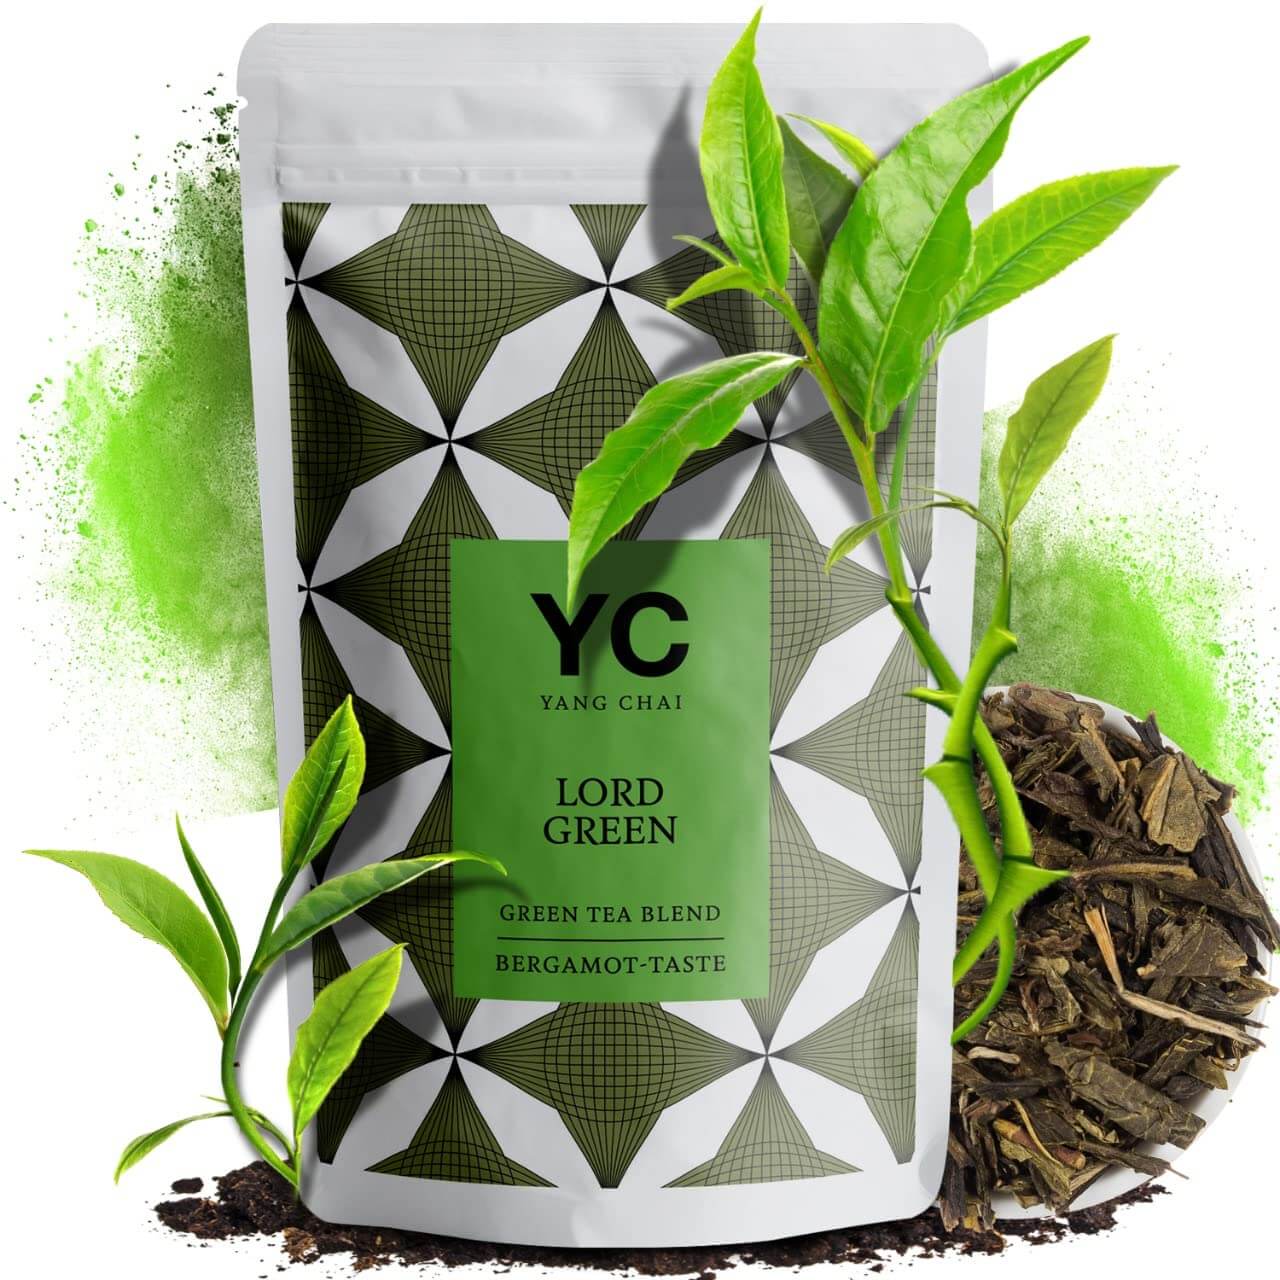 YC Yang Chai Grüner Tee Lose mit Bergamot Geschmack 